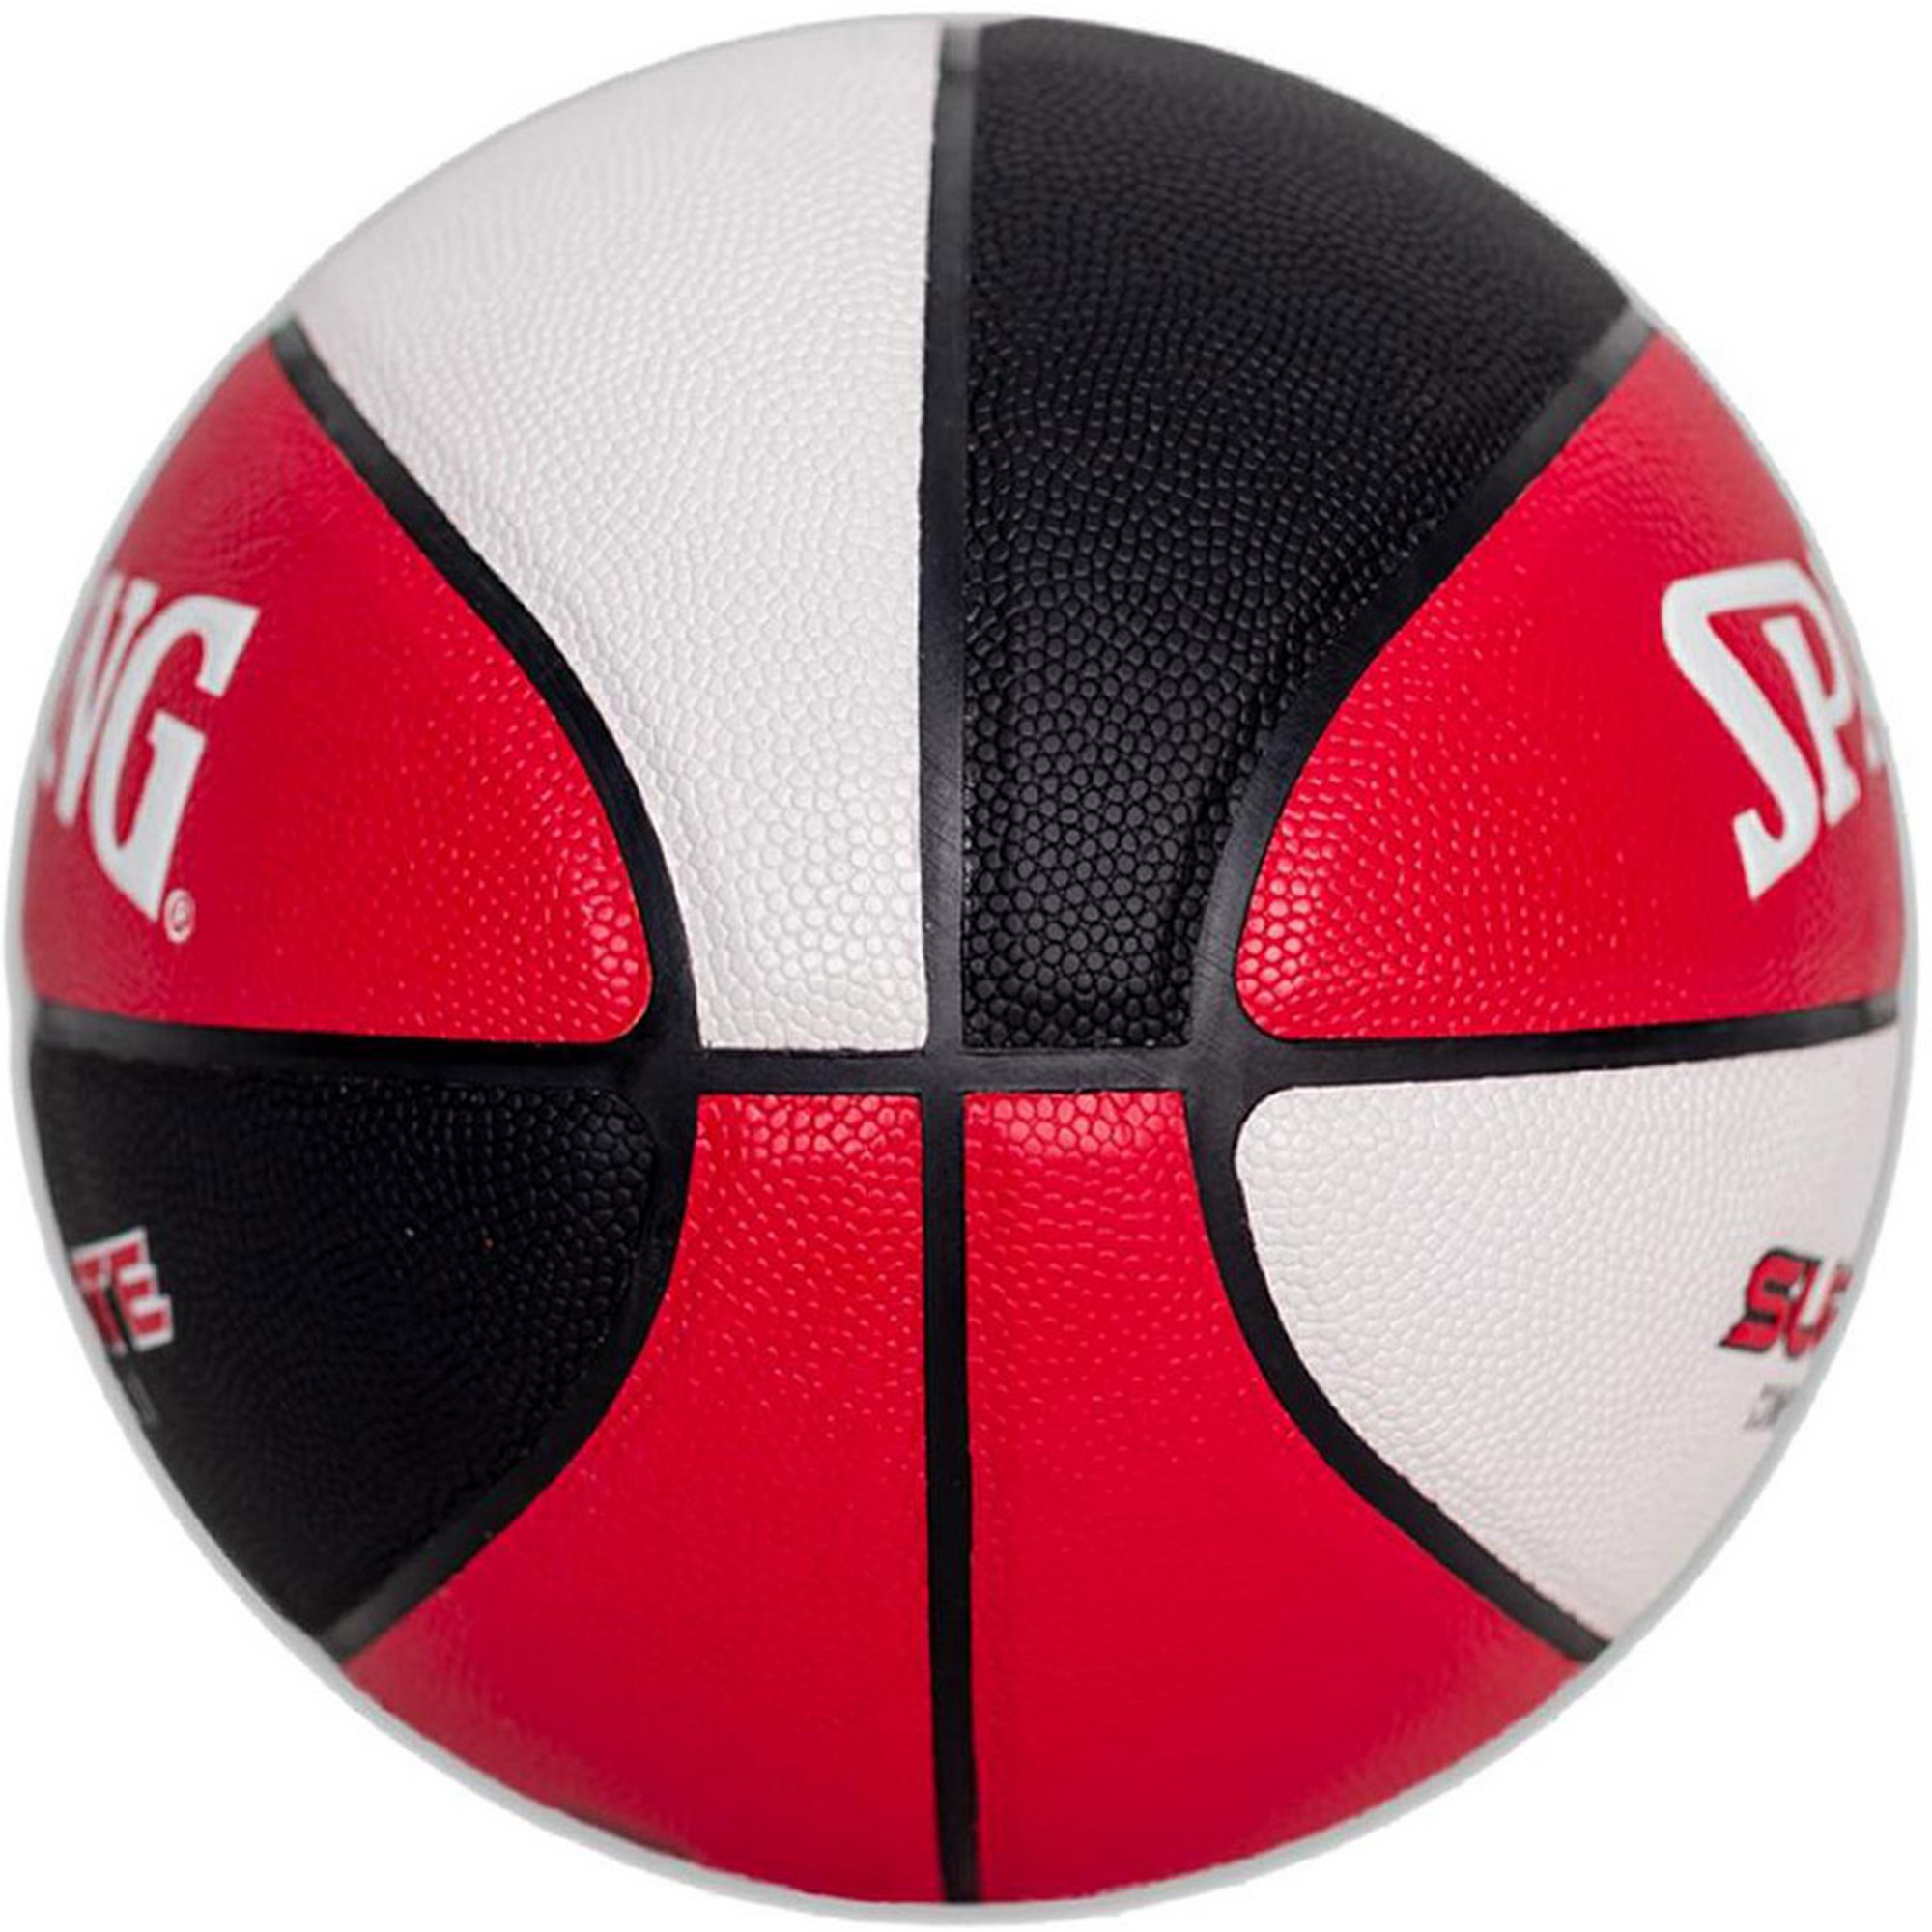 Мяч баскетбольный Spalding Super Flite 76929z р.7 2000_2000